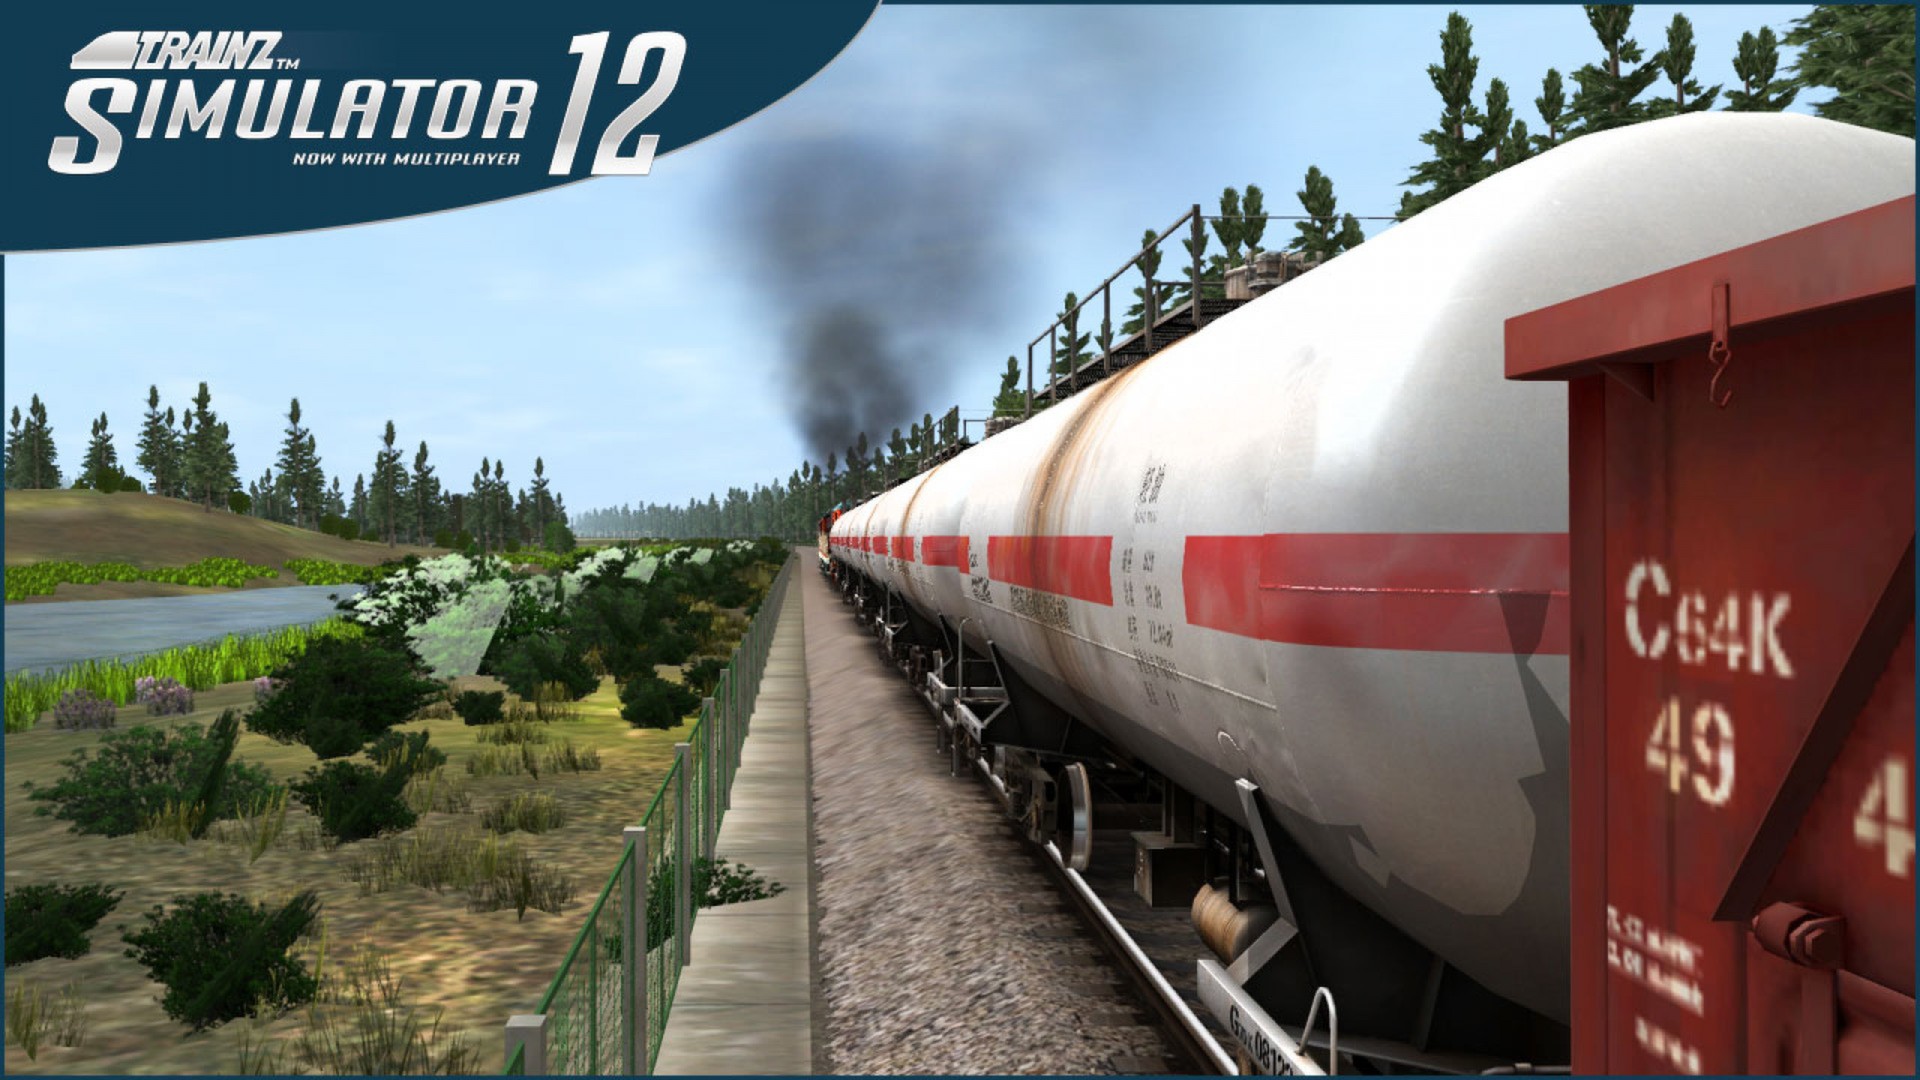 trainz simulator 12 download free pc